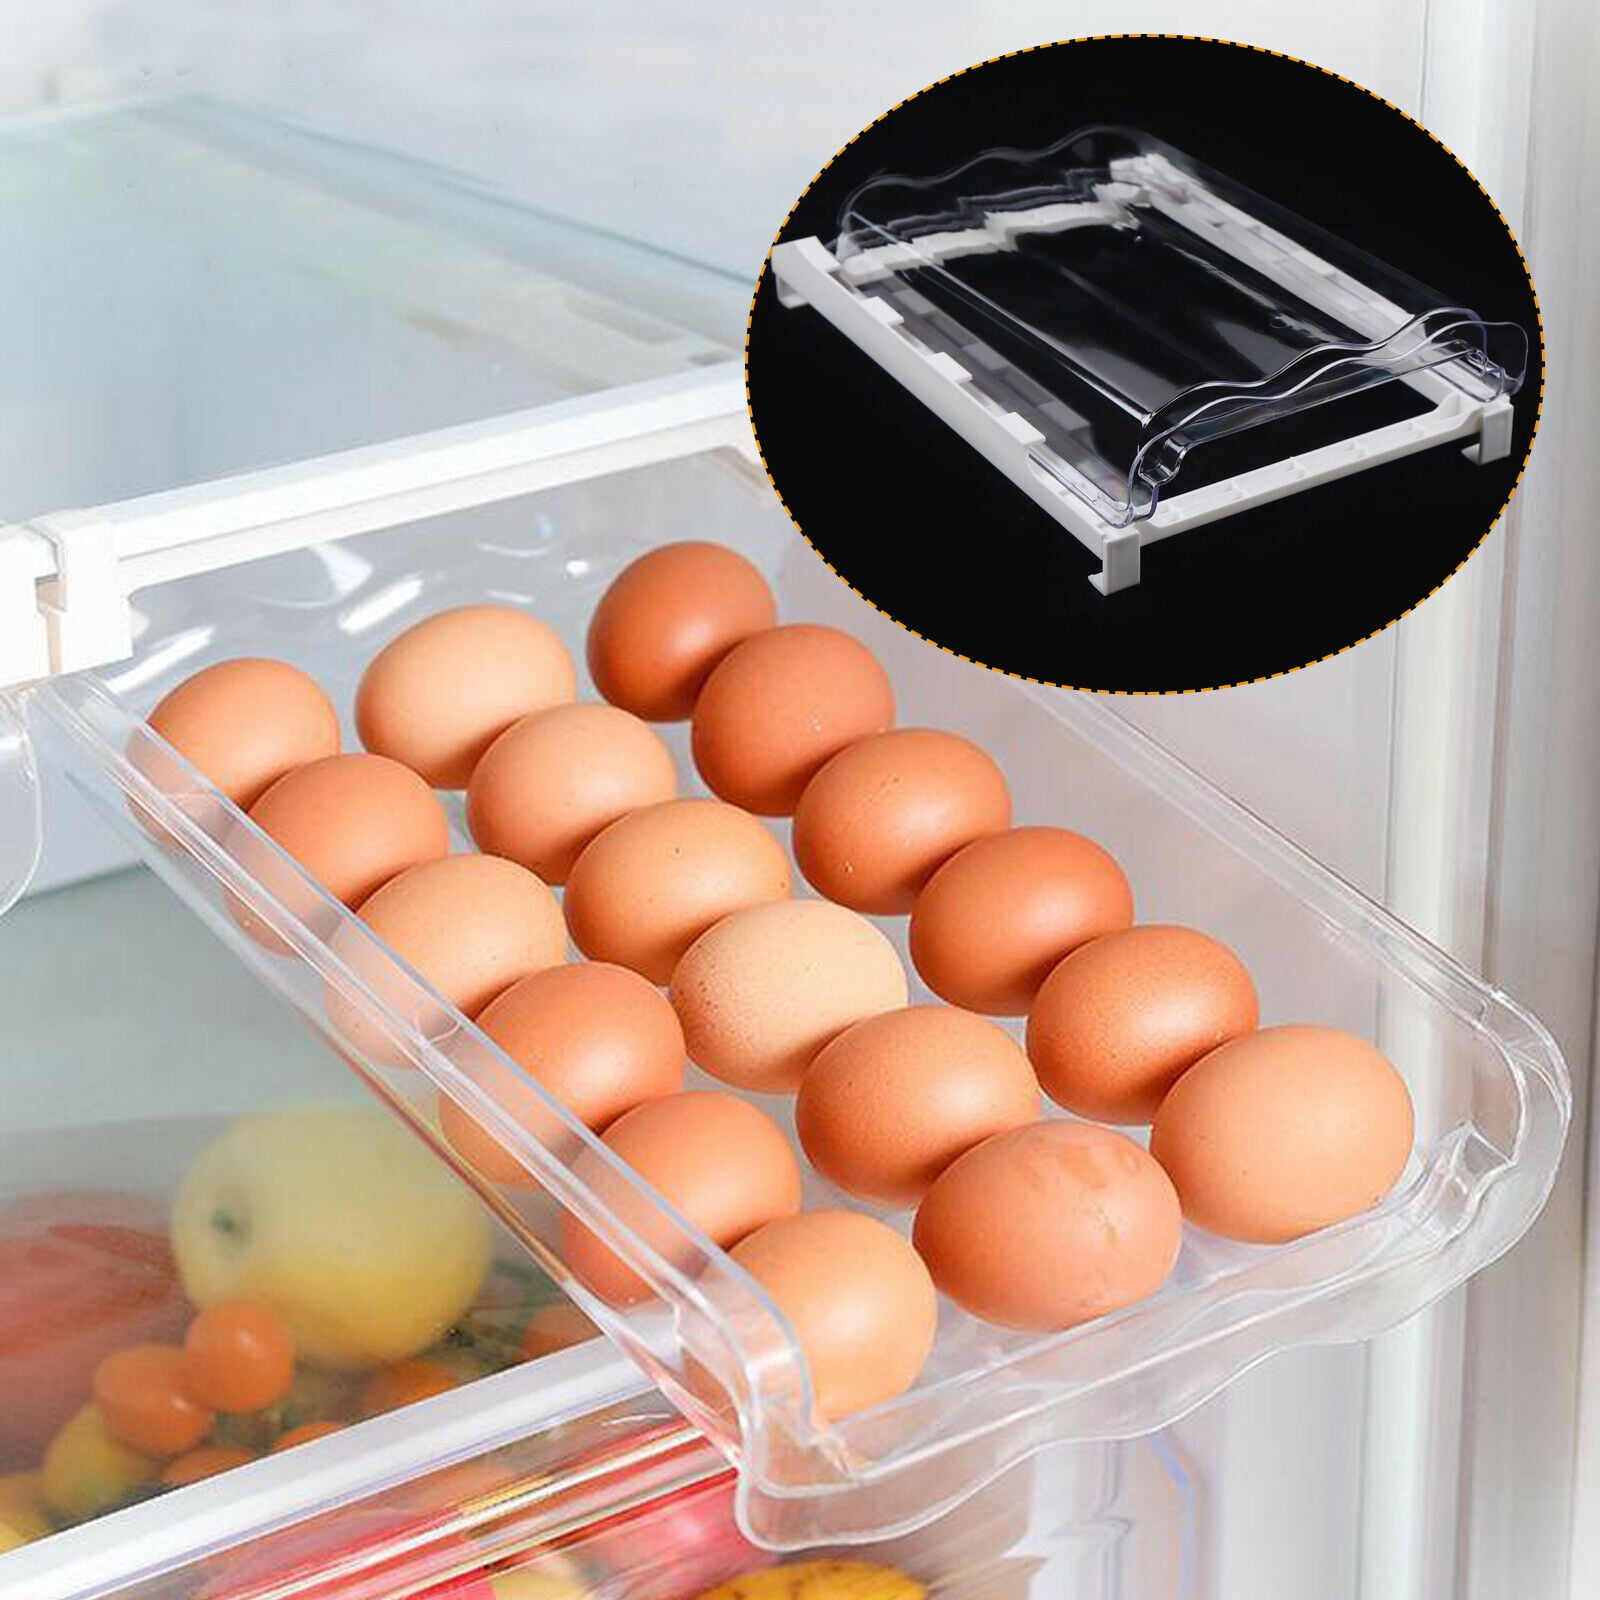 Blue 21 Grid Egg Holder for Refrigerator,Auto Scrolling Egg Storage Box,Egg Storage Container for Fridge Kitchen